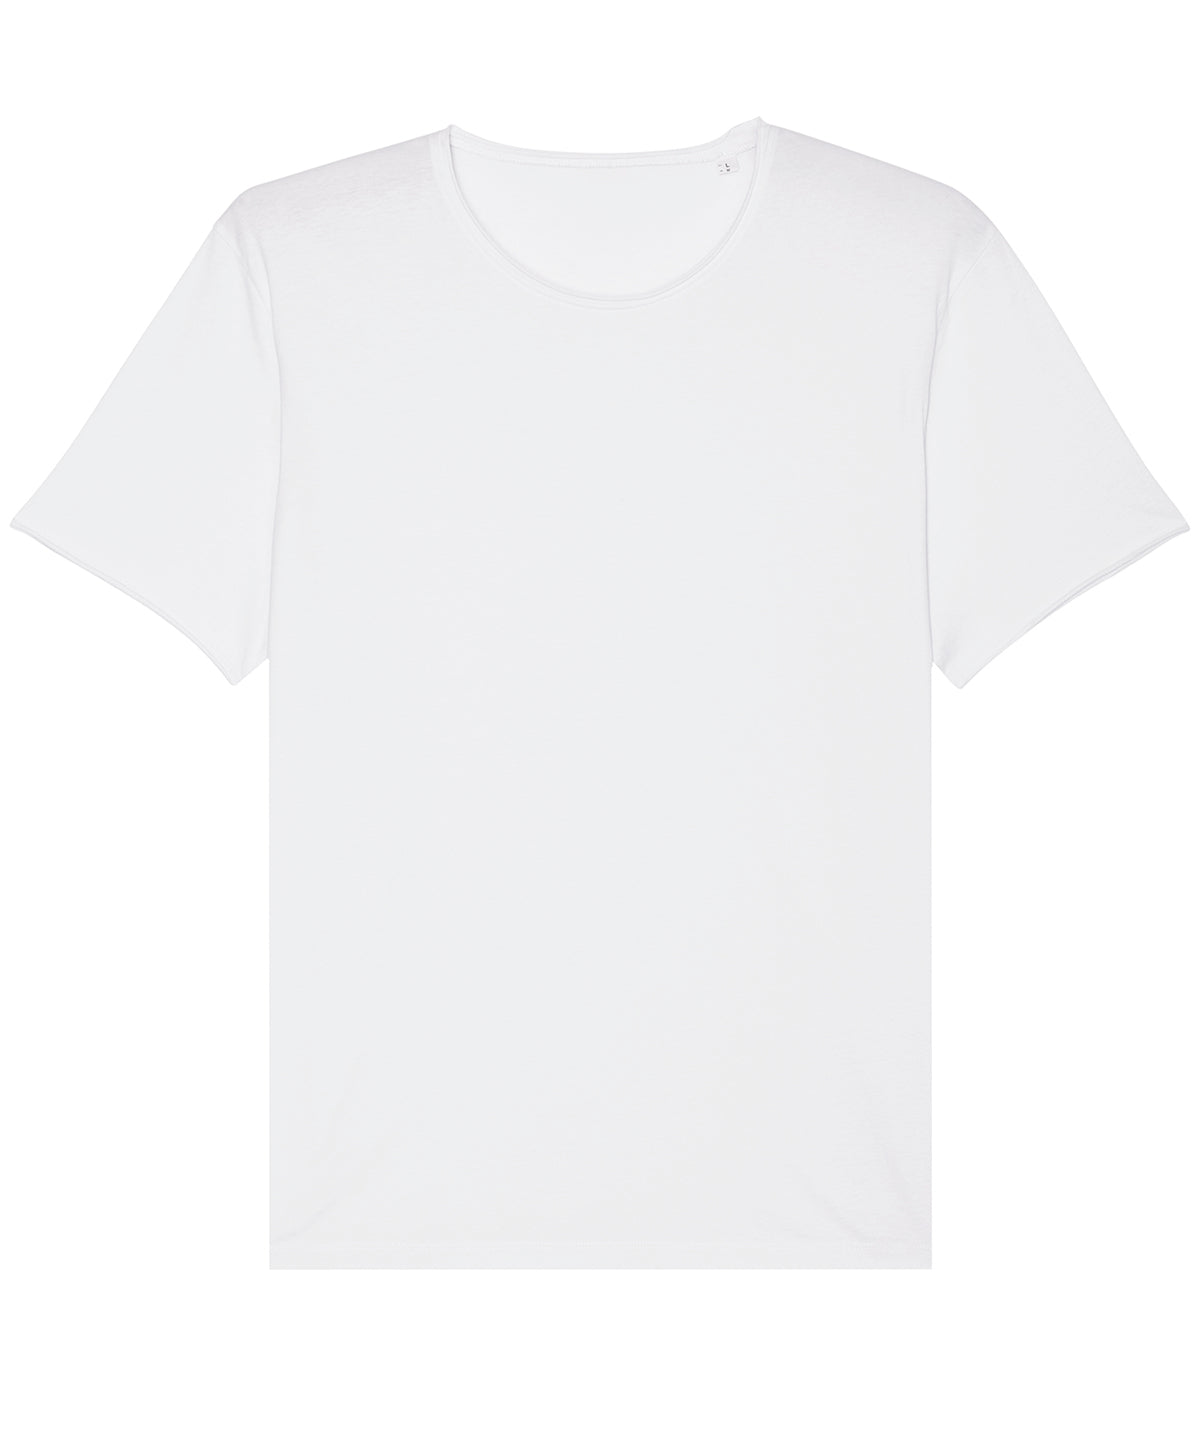 Imaginer, The unisex raw edge t-shirt (STTU647)